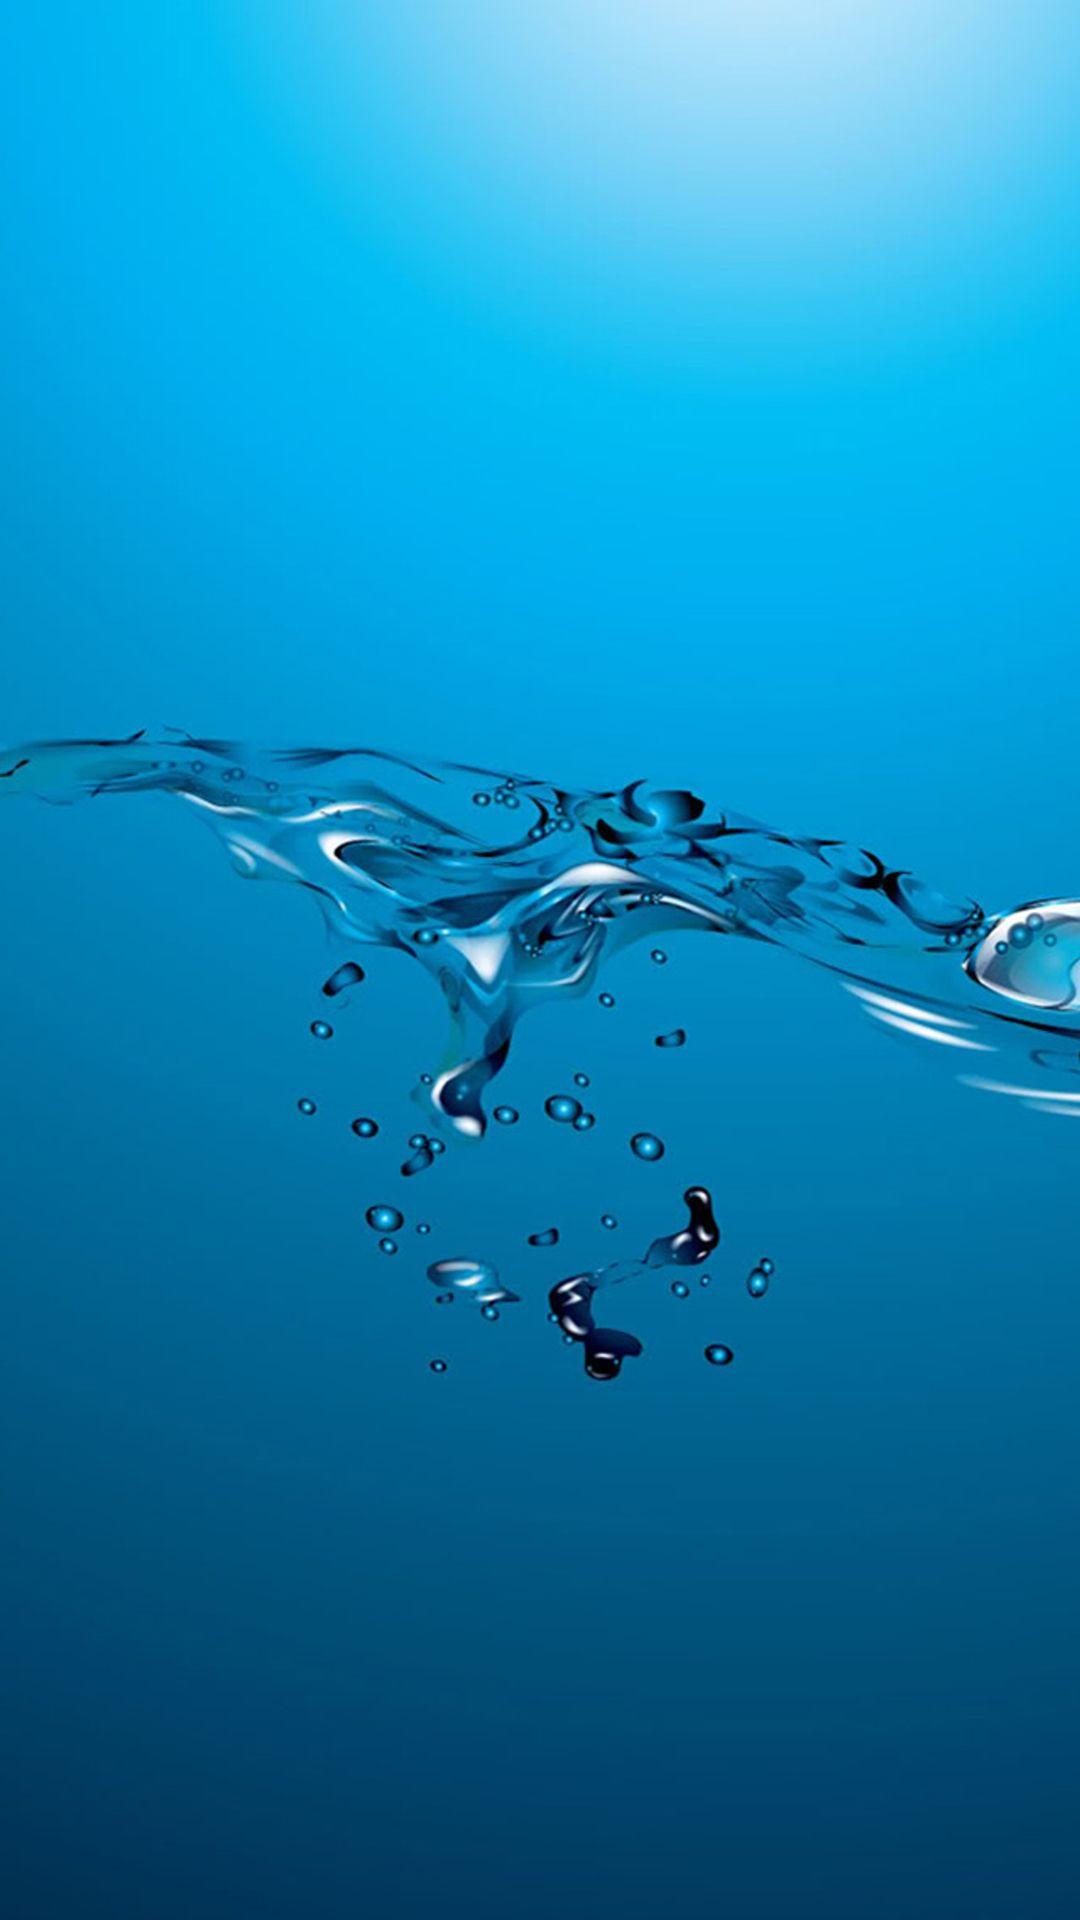 Abstract Ocean Water Splash iPhone 6 wallpaper. Blue Wallpaper